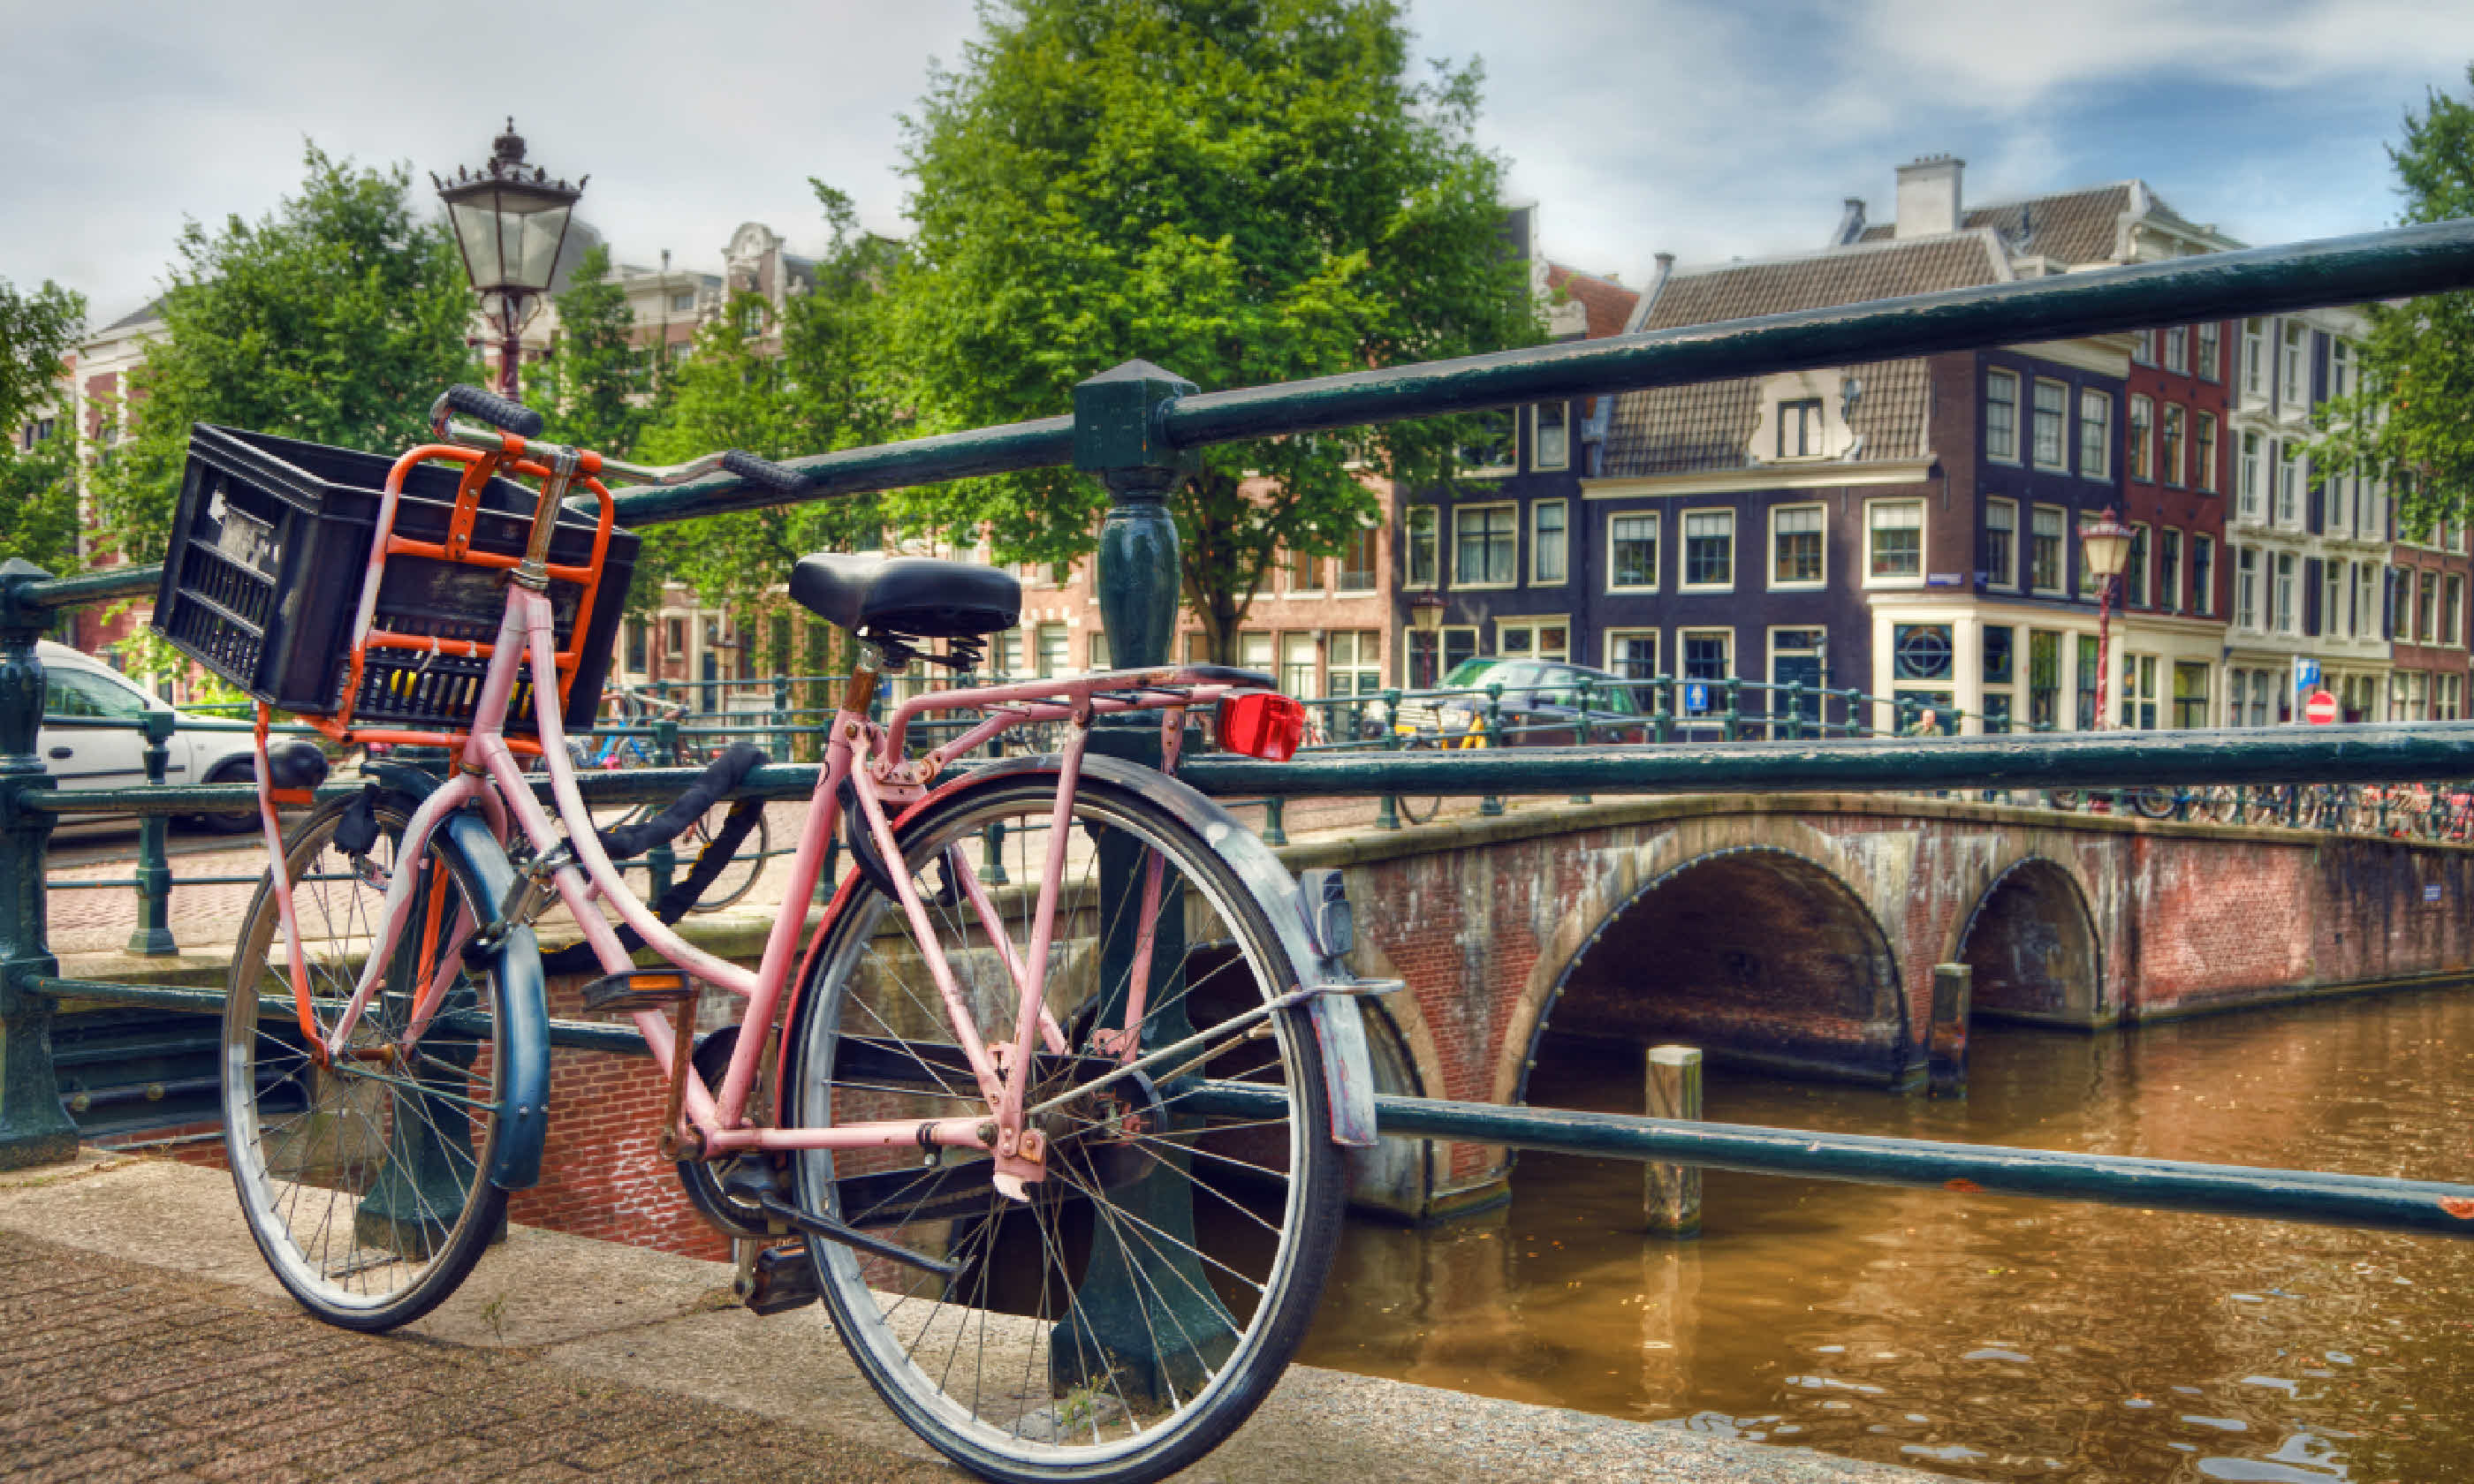 Amsterdam canal scene (Shutterstock)